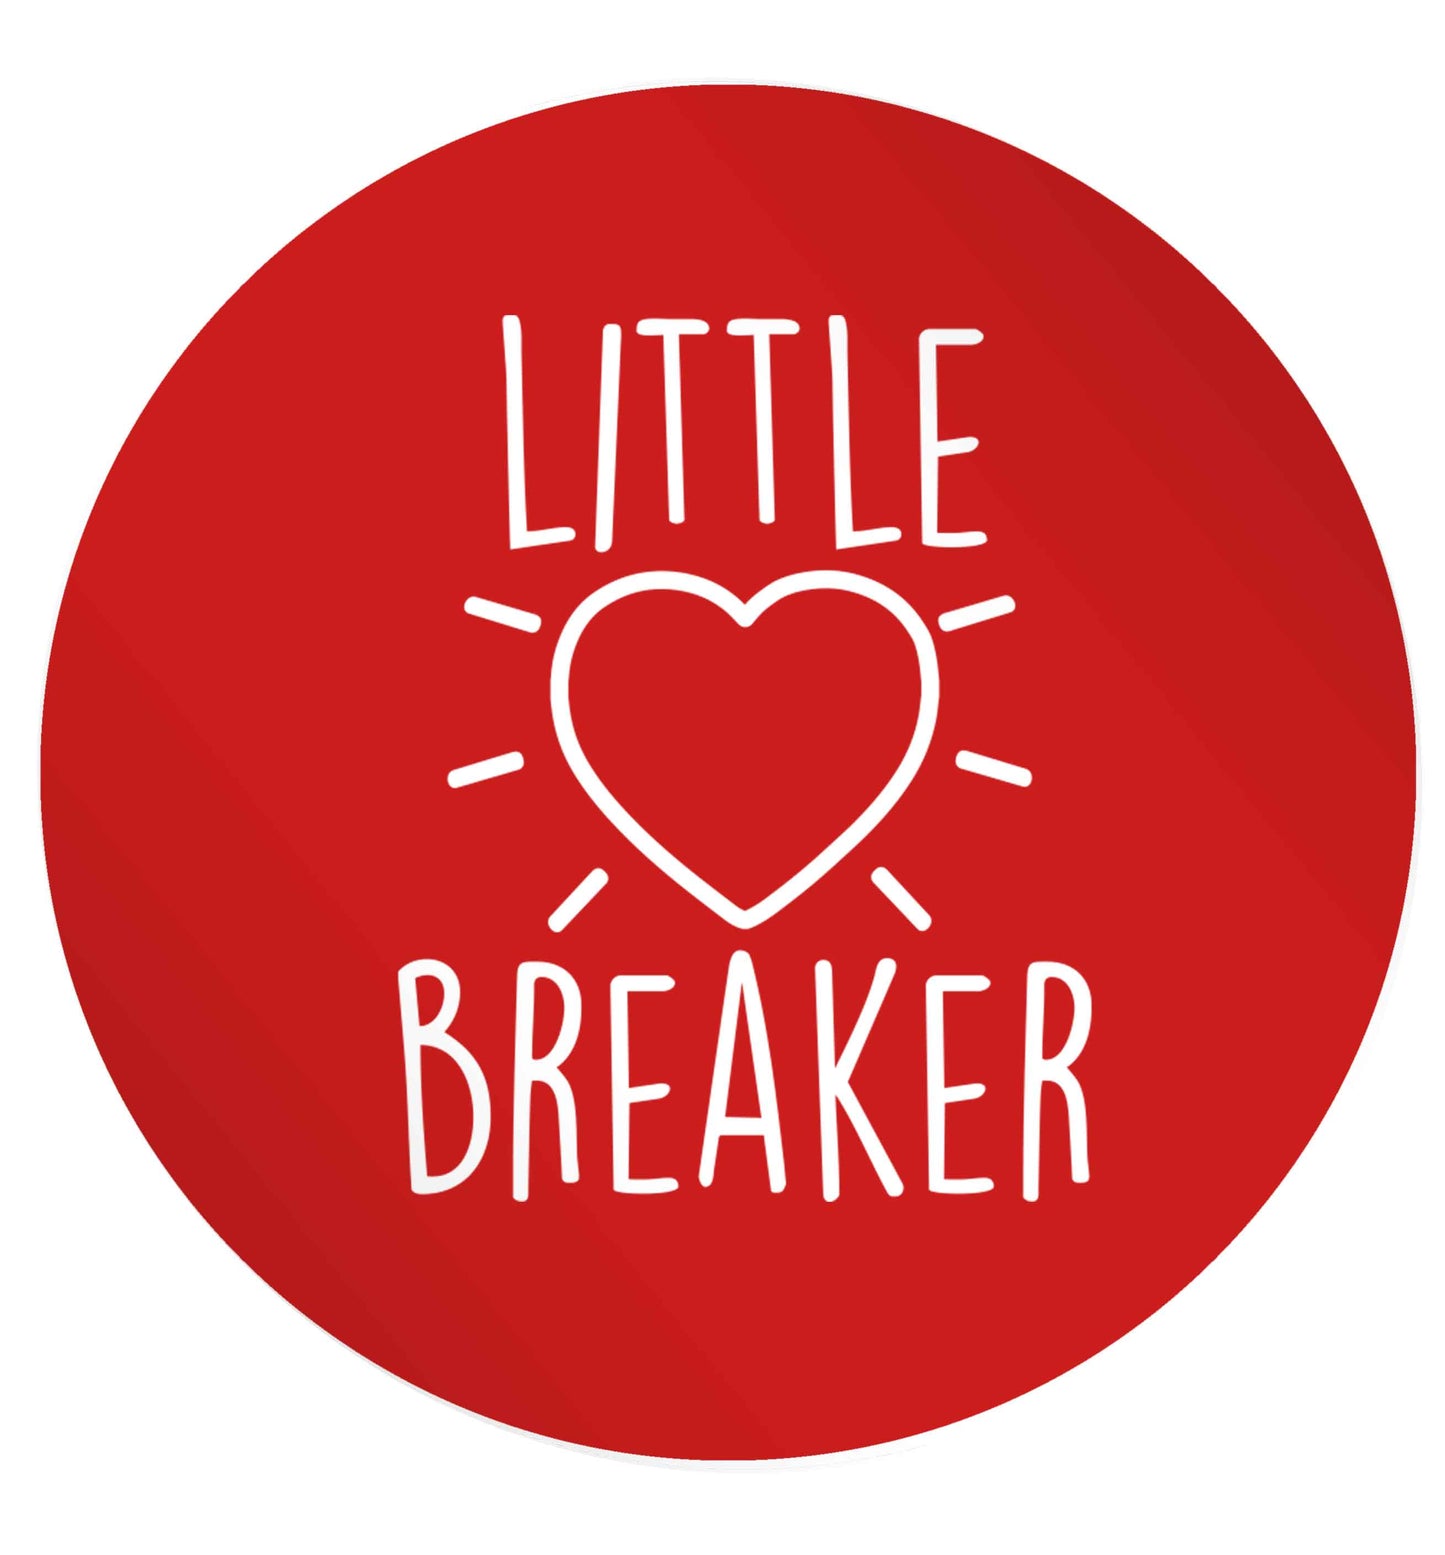 Little heartbreaker 24 @ 45mm matt circle stickers